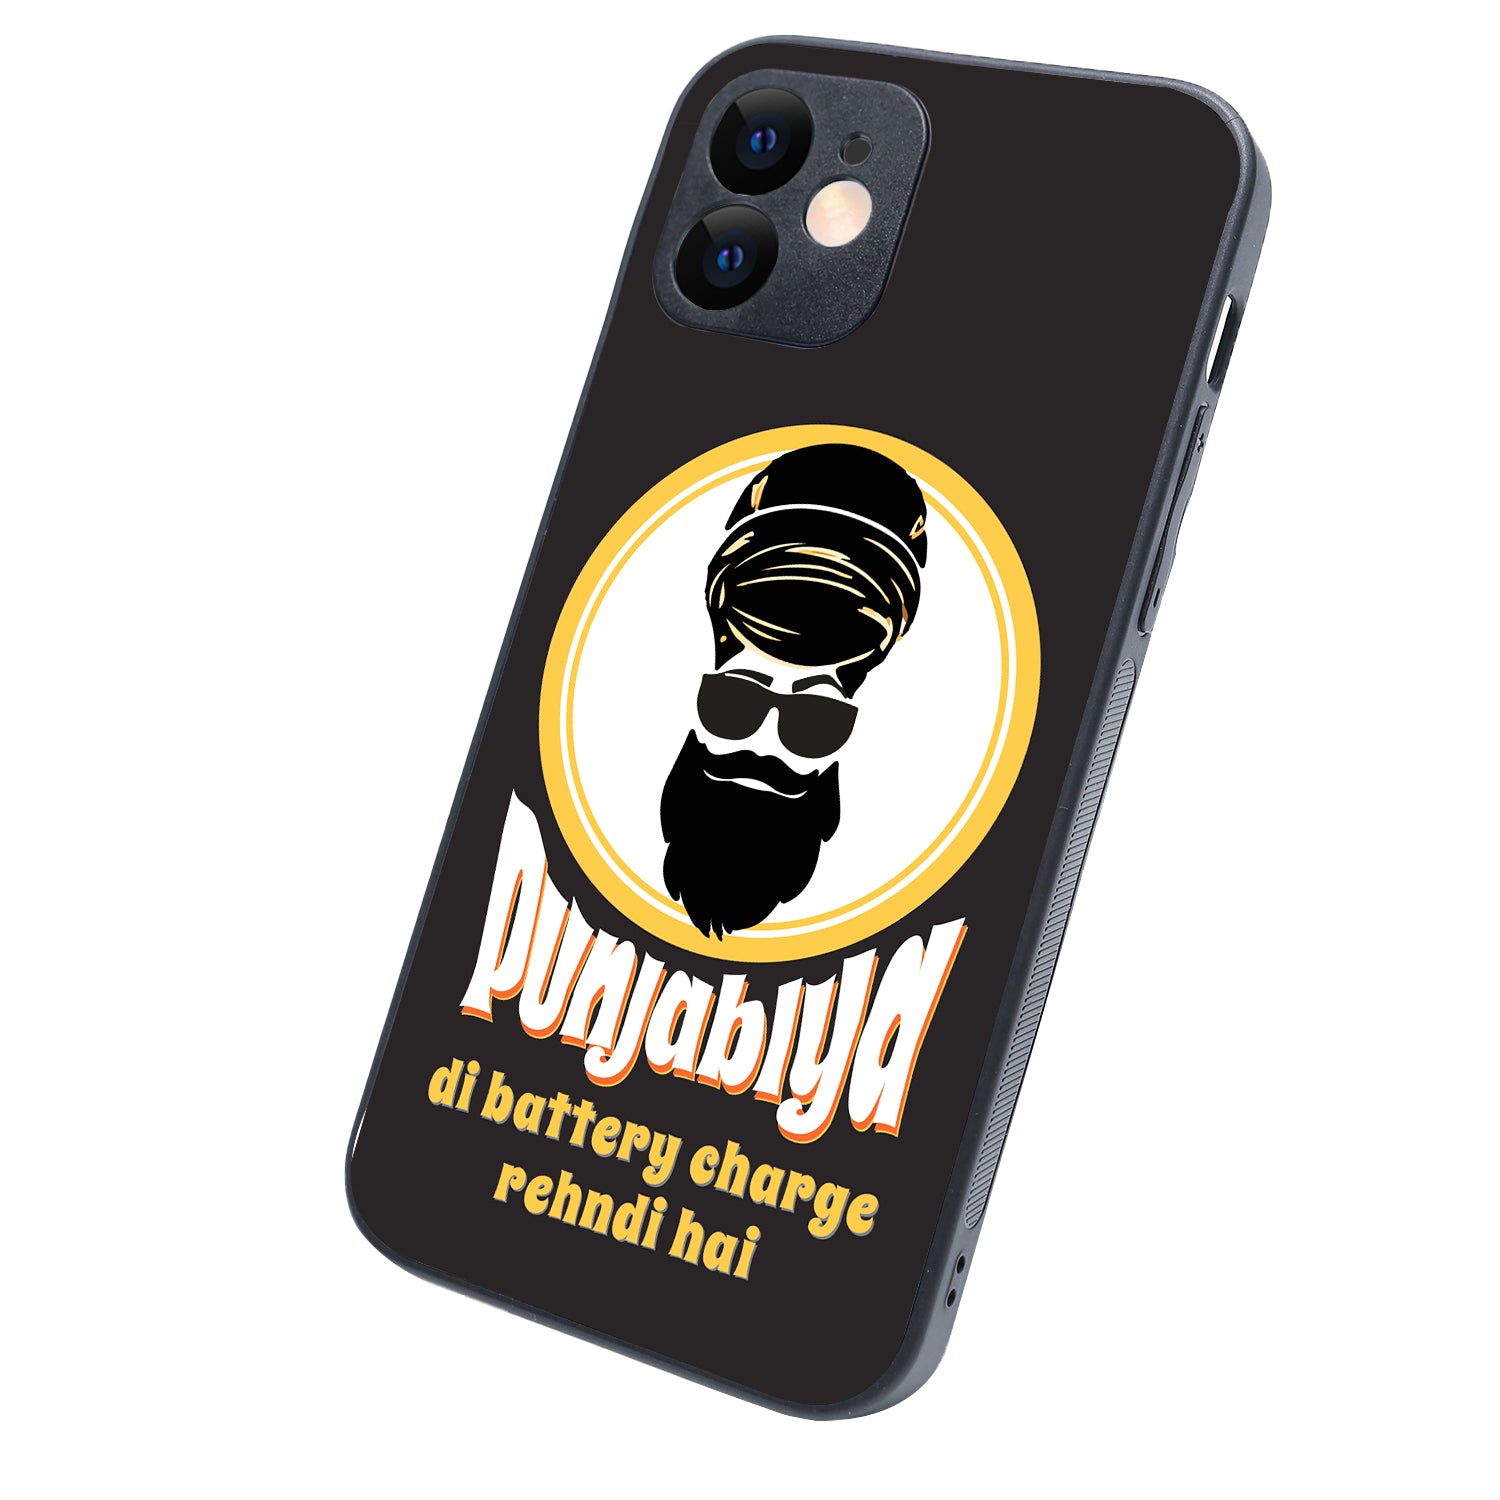 Punjabiyan Di Battery Masculine iPhone 12 Case